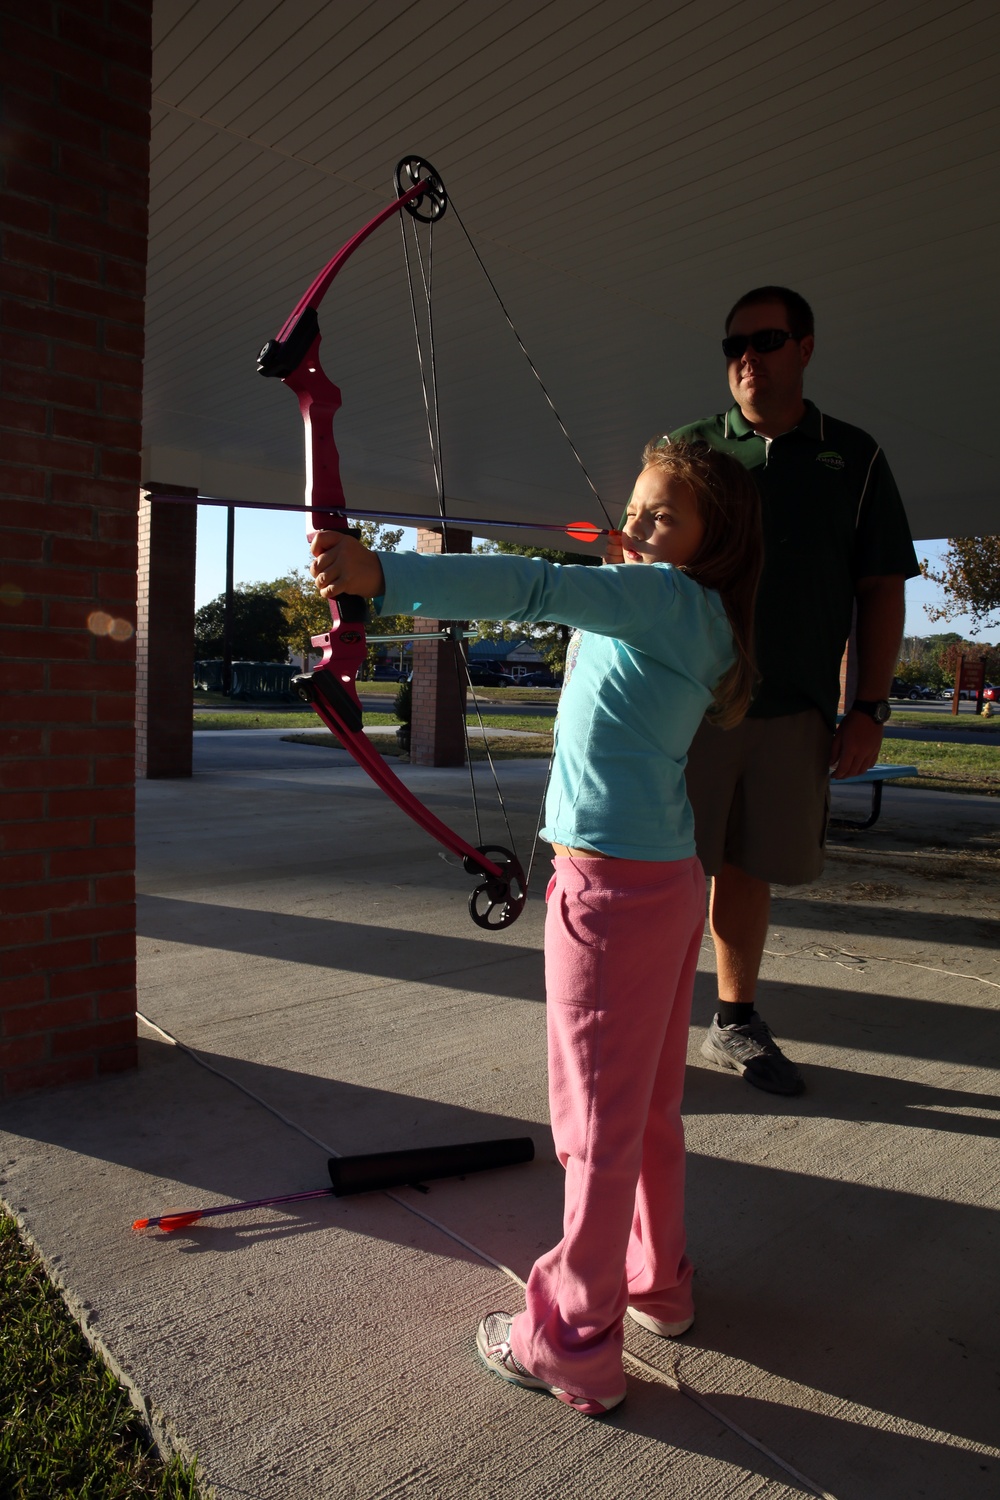 Military children learn archery fundamentals